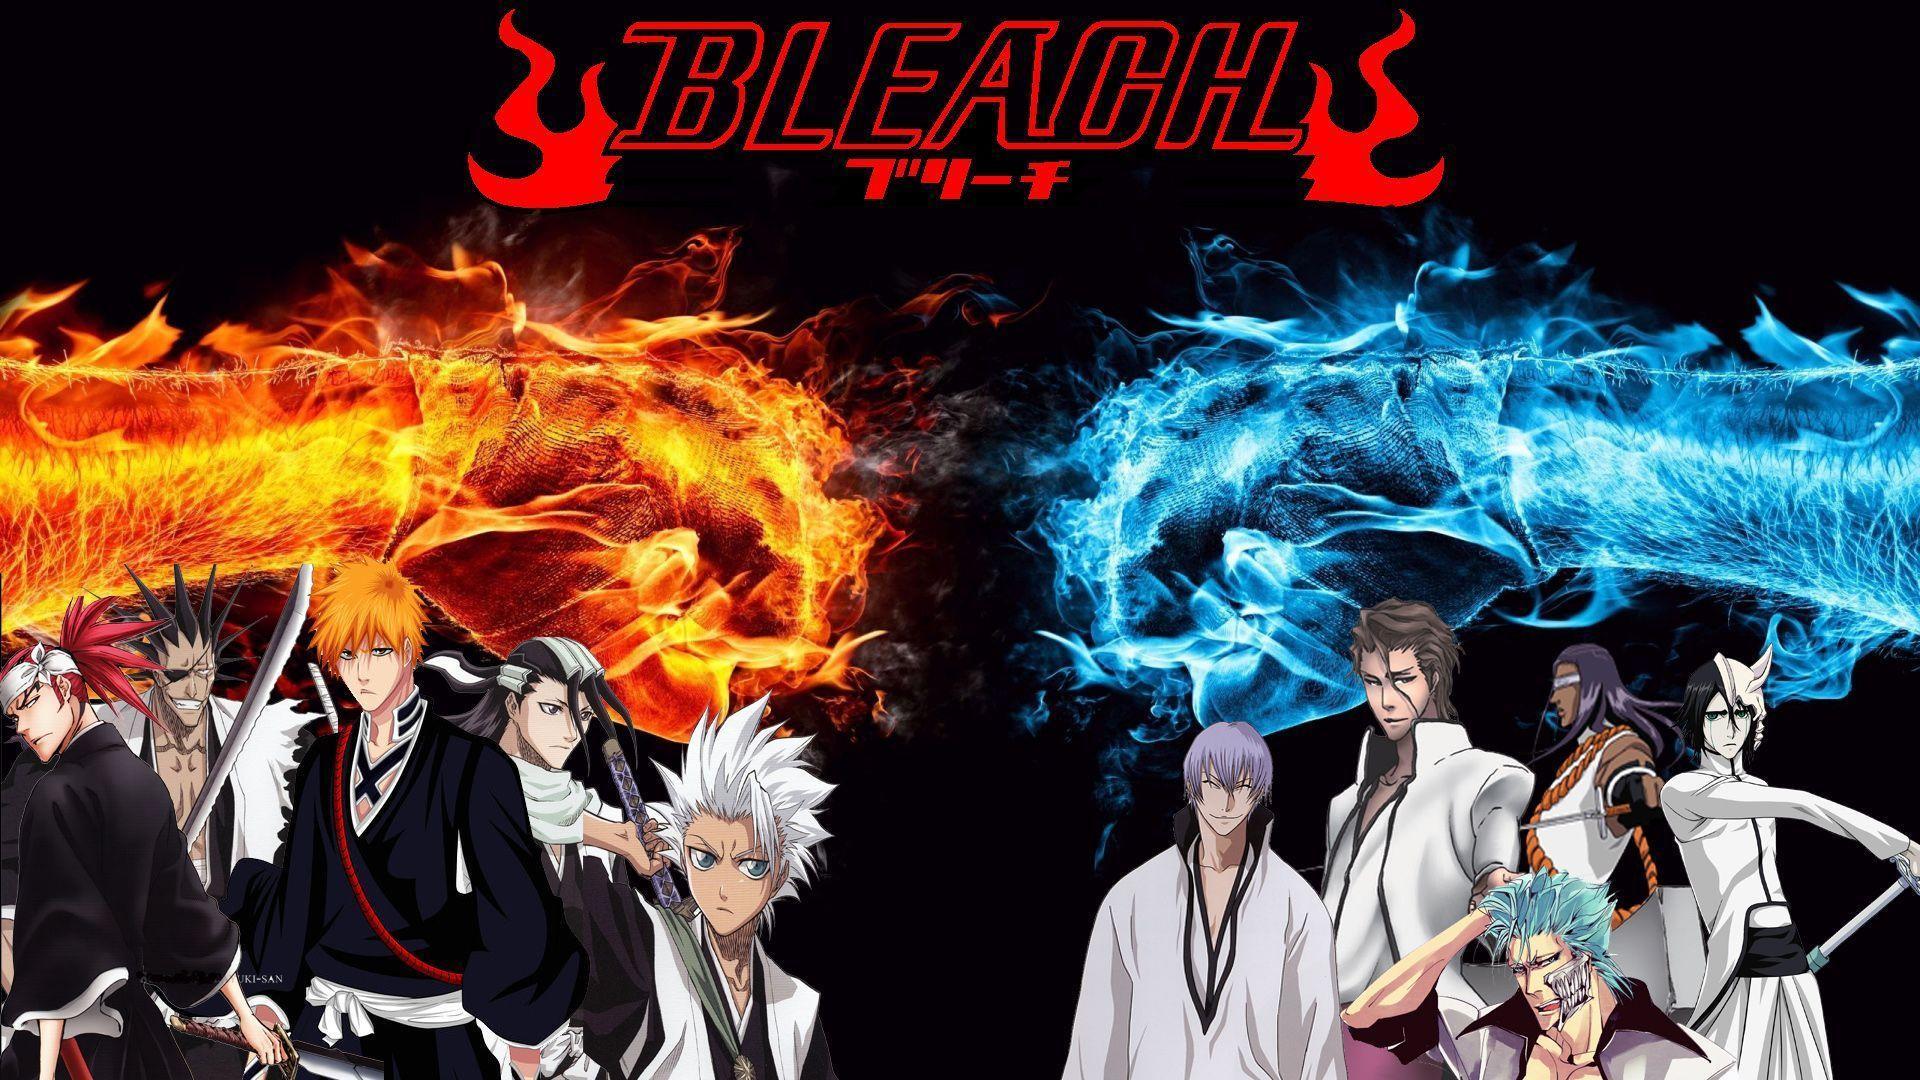 Bleach Character Image Warfare Wallpaper